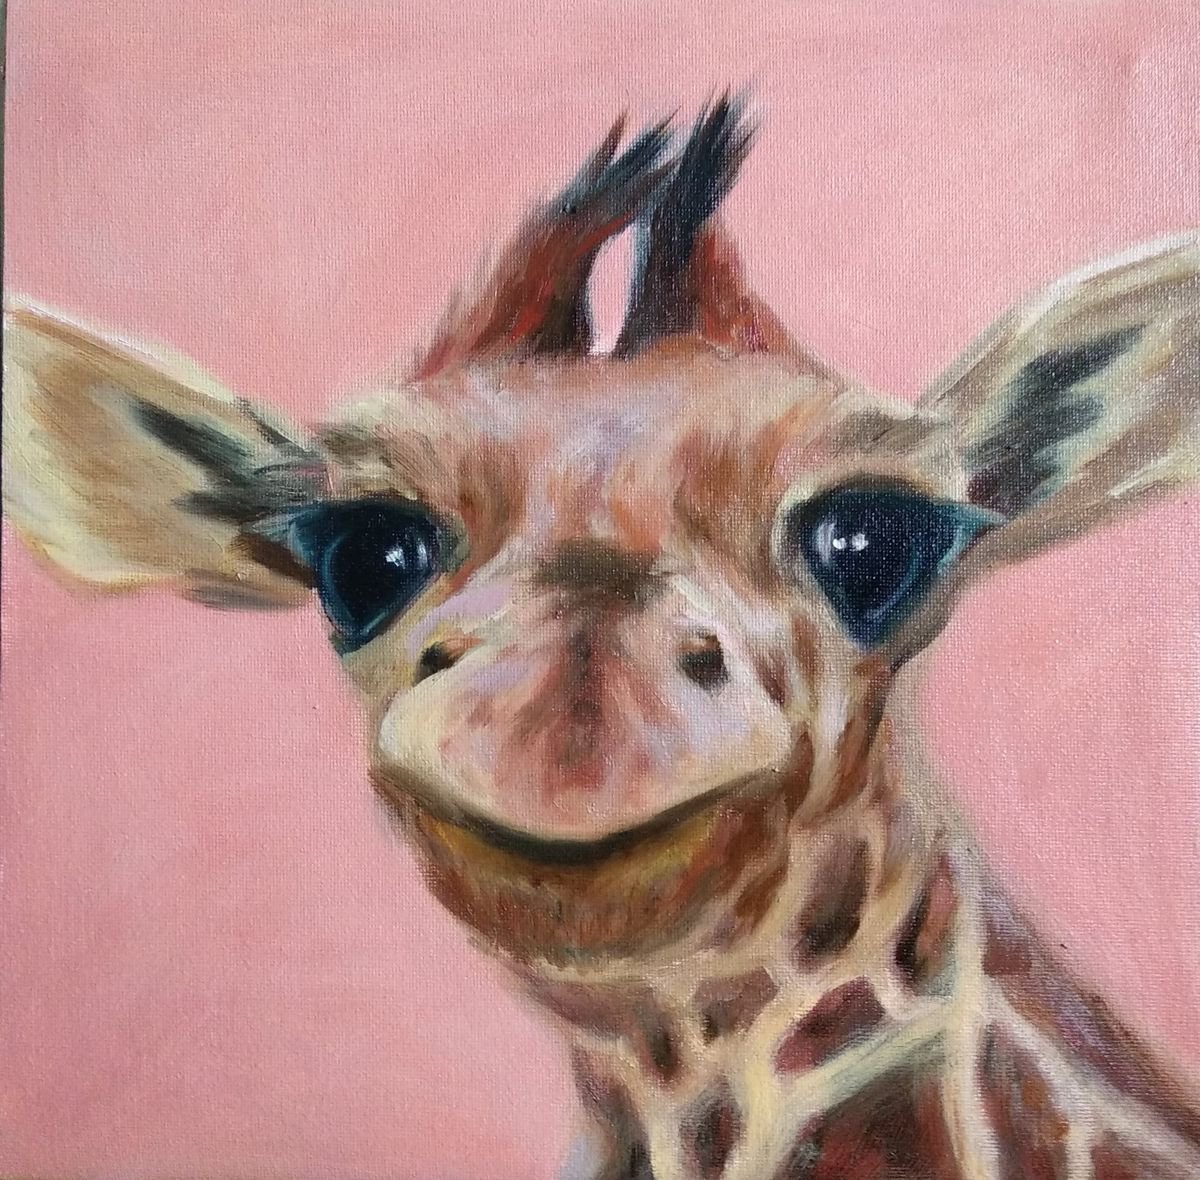 Animals Giraffe Painting Smiling Face Positive Art Nursery decor Kids room Funny animals by Anastasia Art Line